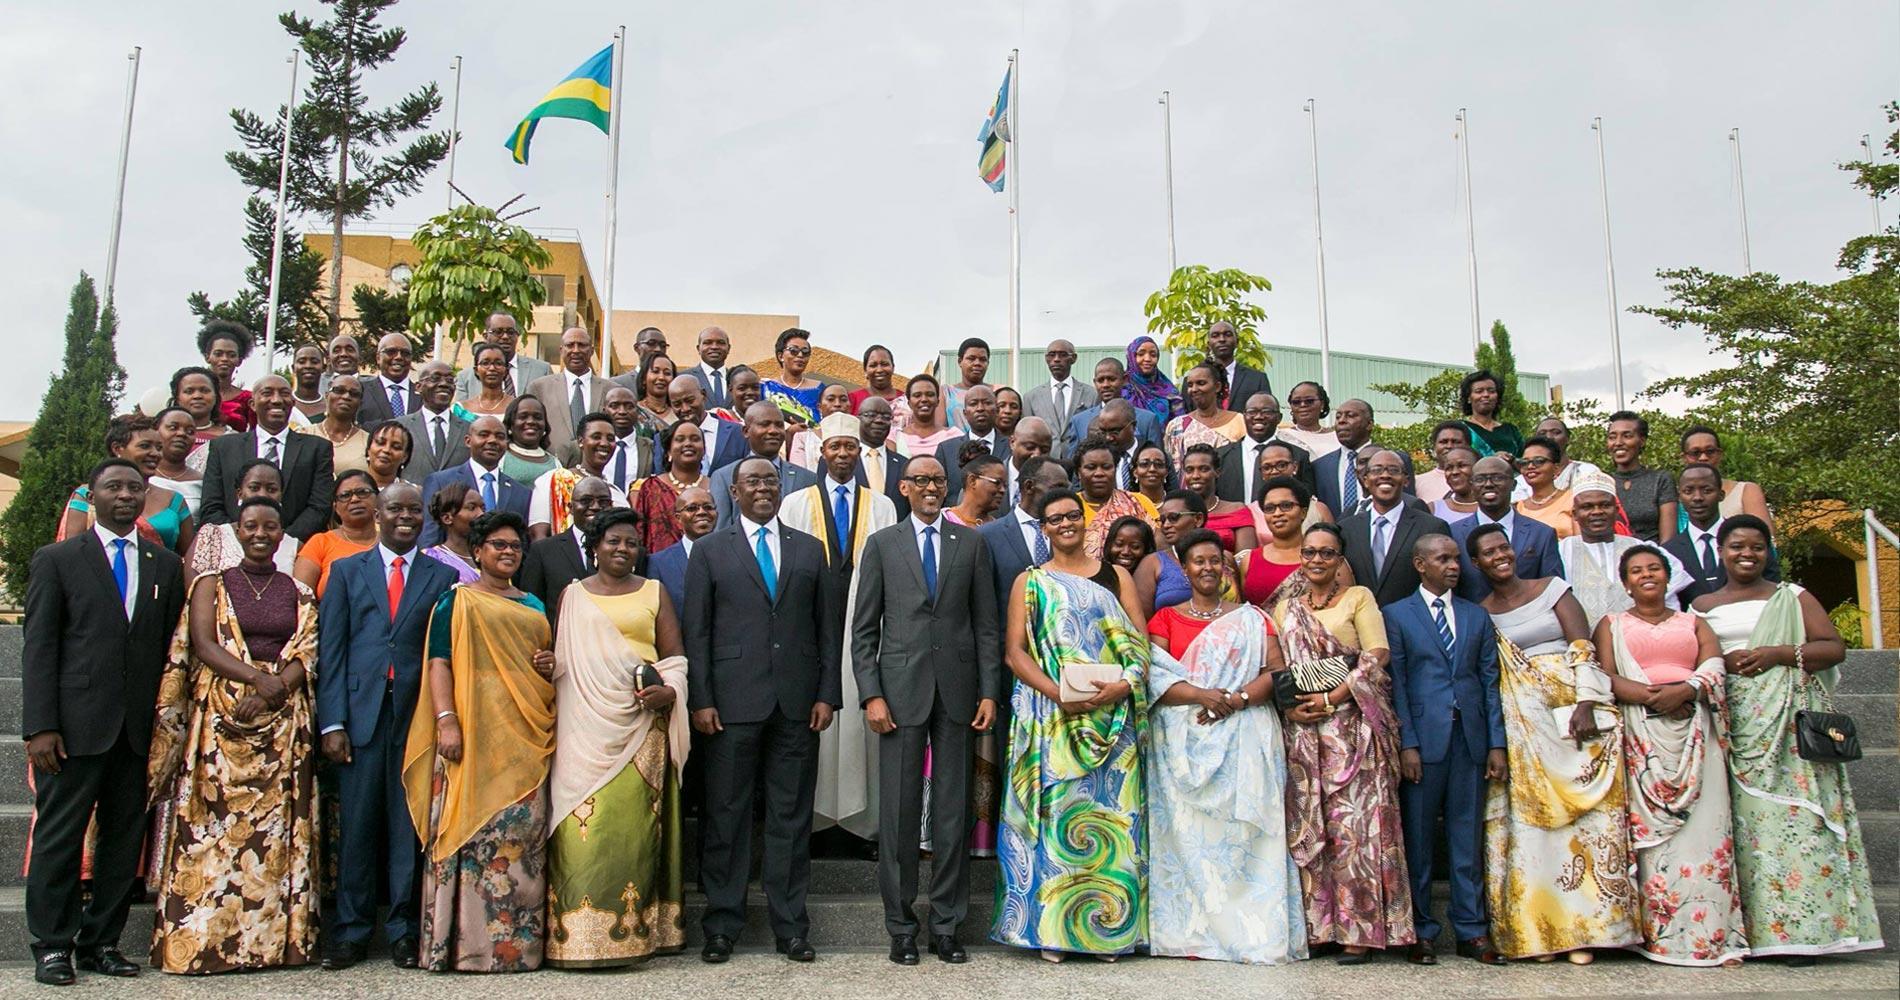 Rwanda Leads and Succeeds via Gender Equality